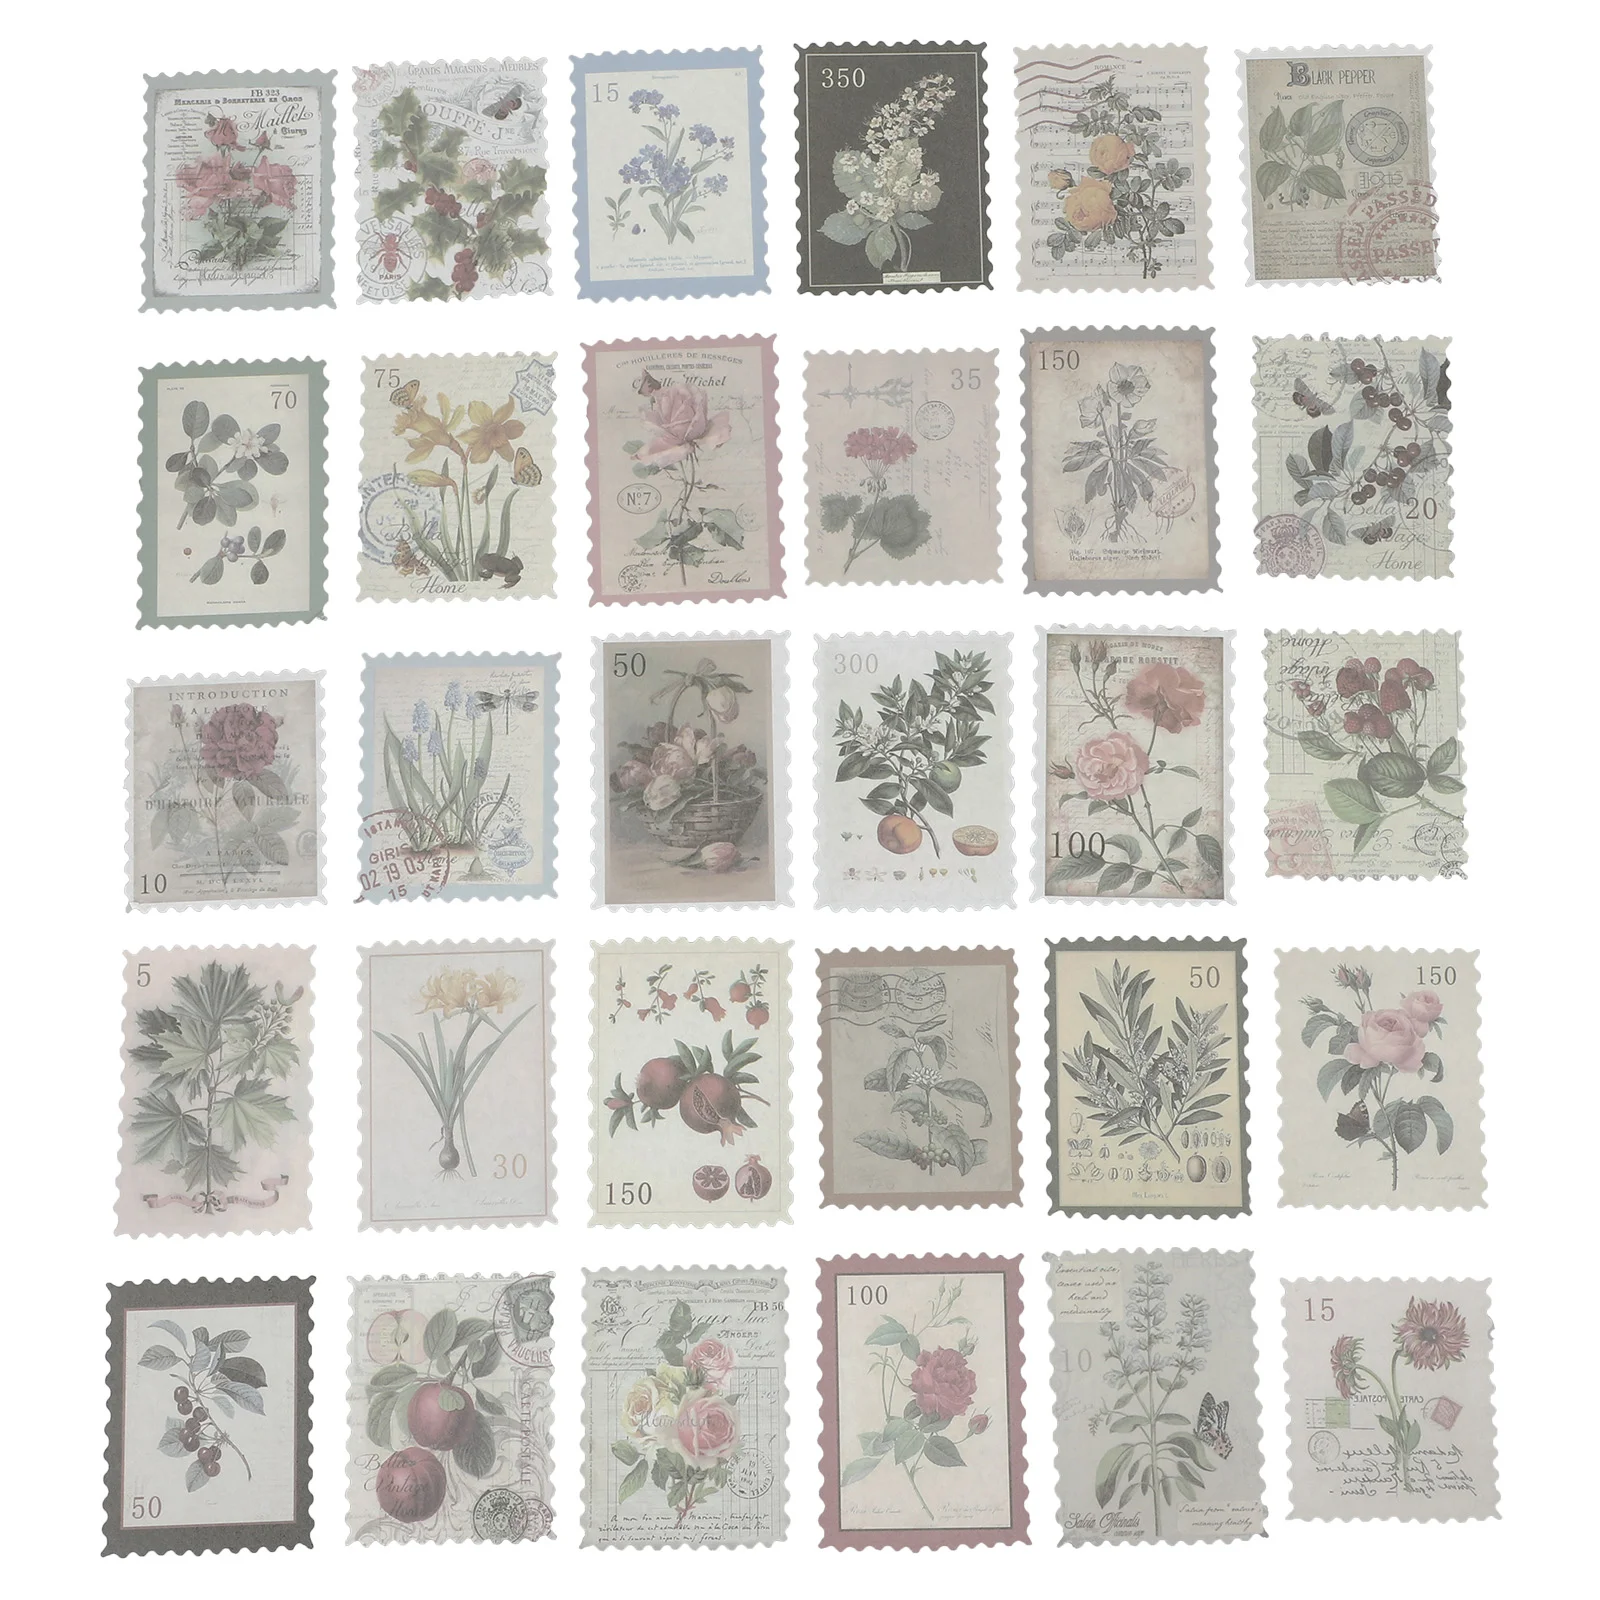 

Sticker Stickers Stamp Paper Vintage Postage Washi Scrapbooking Retro Botanical Journaling Supplies Decal Scrapbook Set